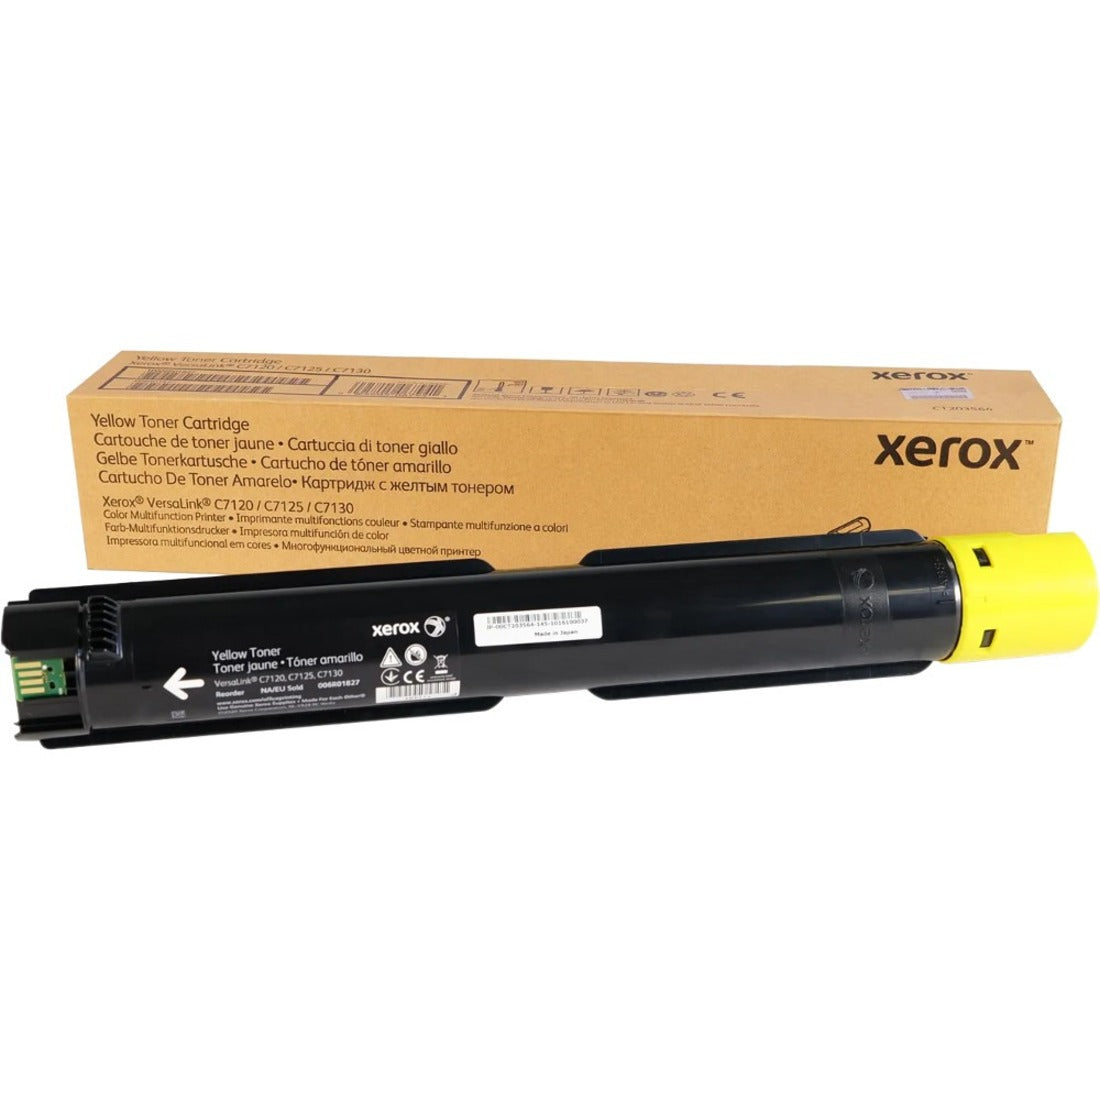 Xerox 006R01827 Toner Cartridge, Yellow - High Yield, 18,000 Pages